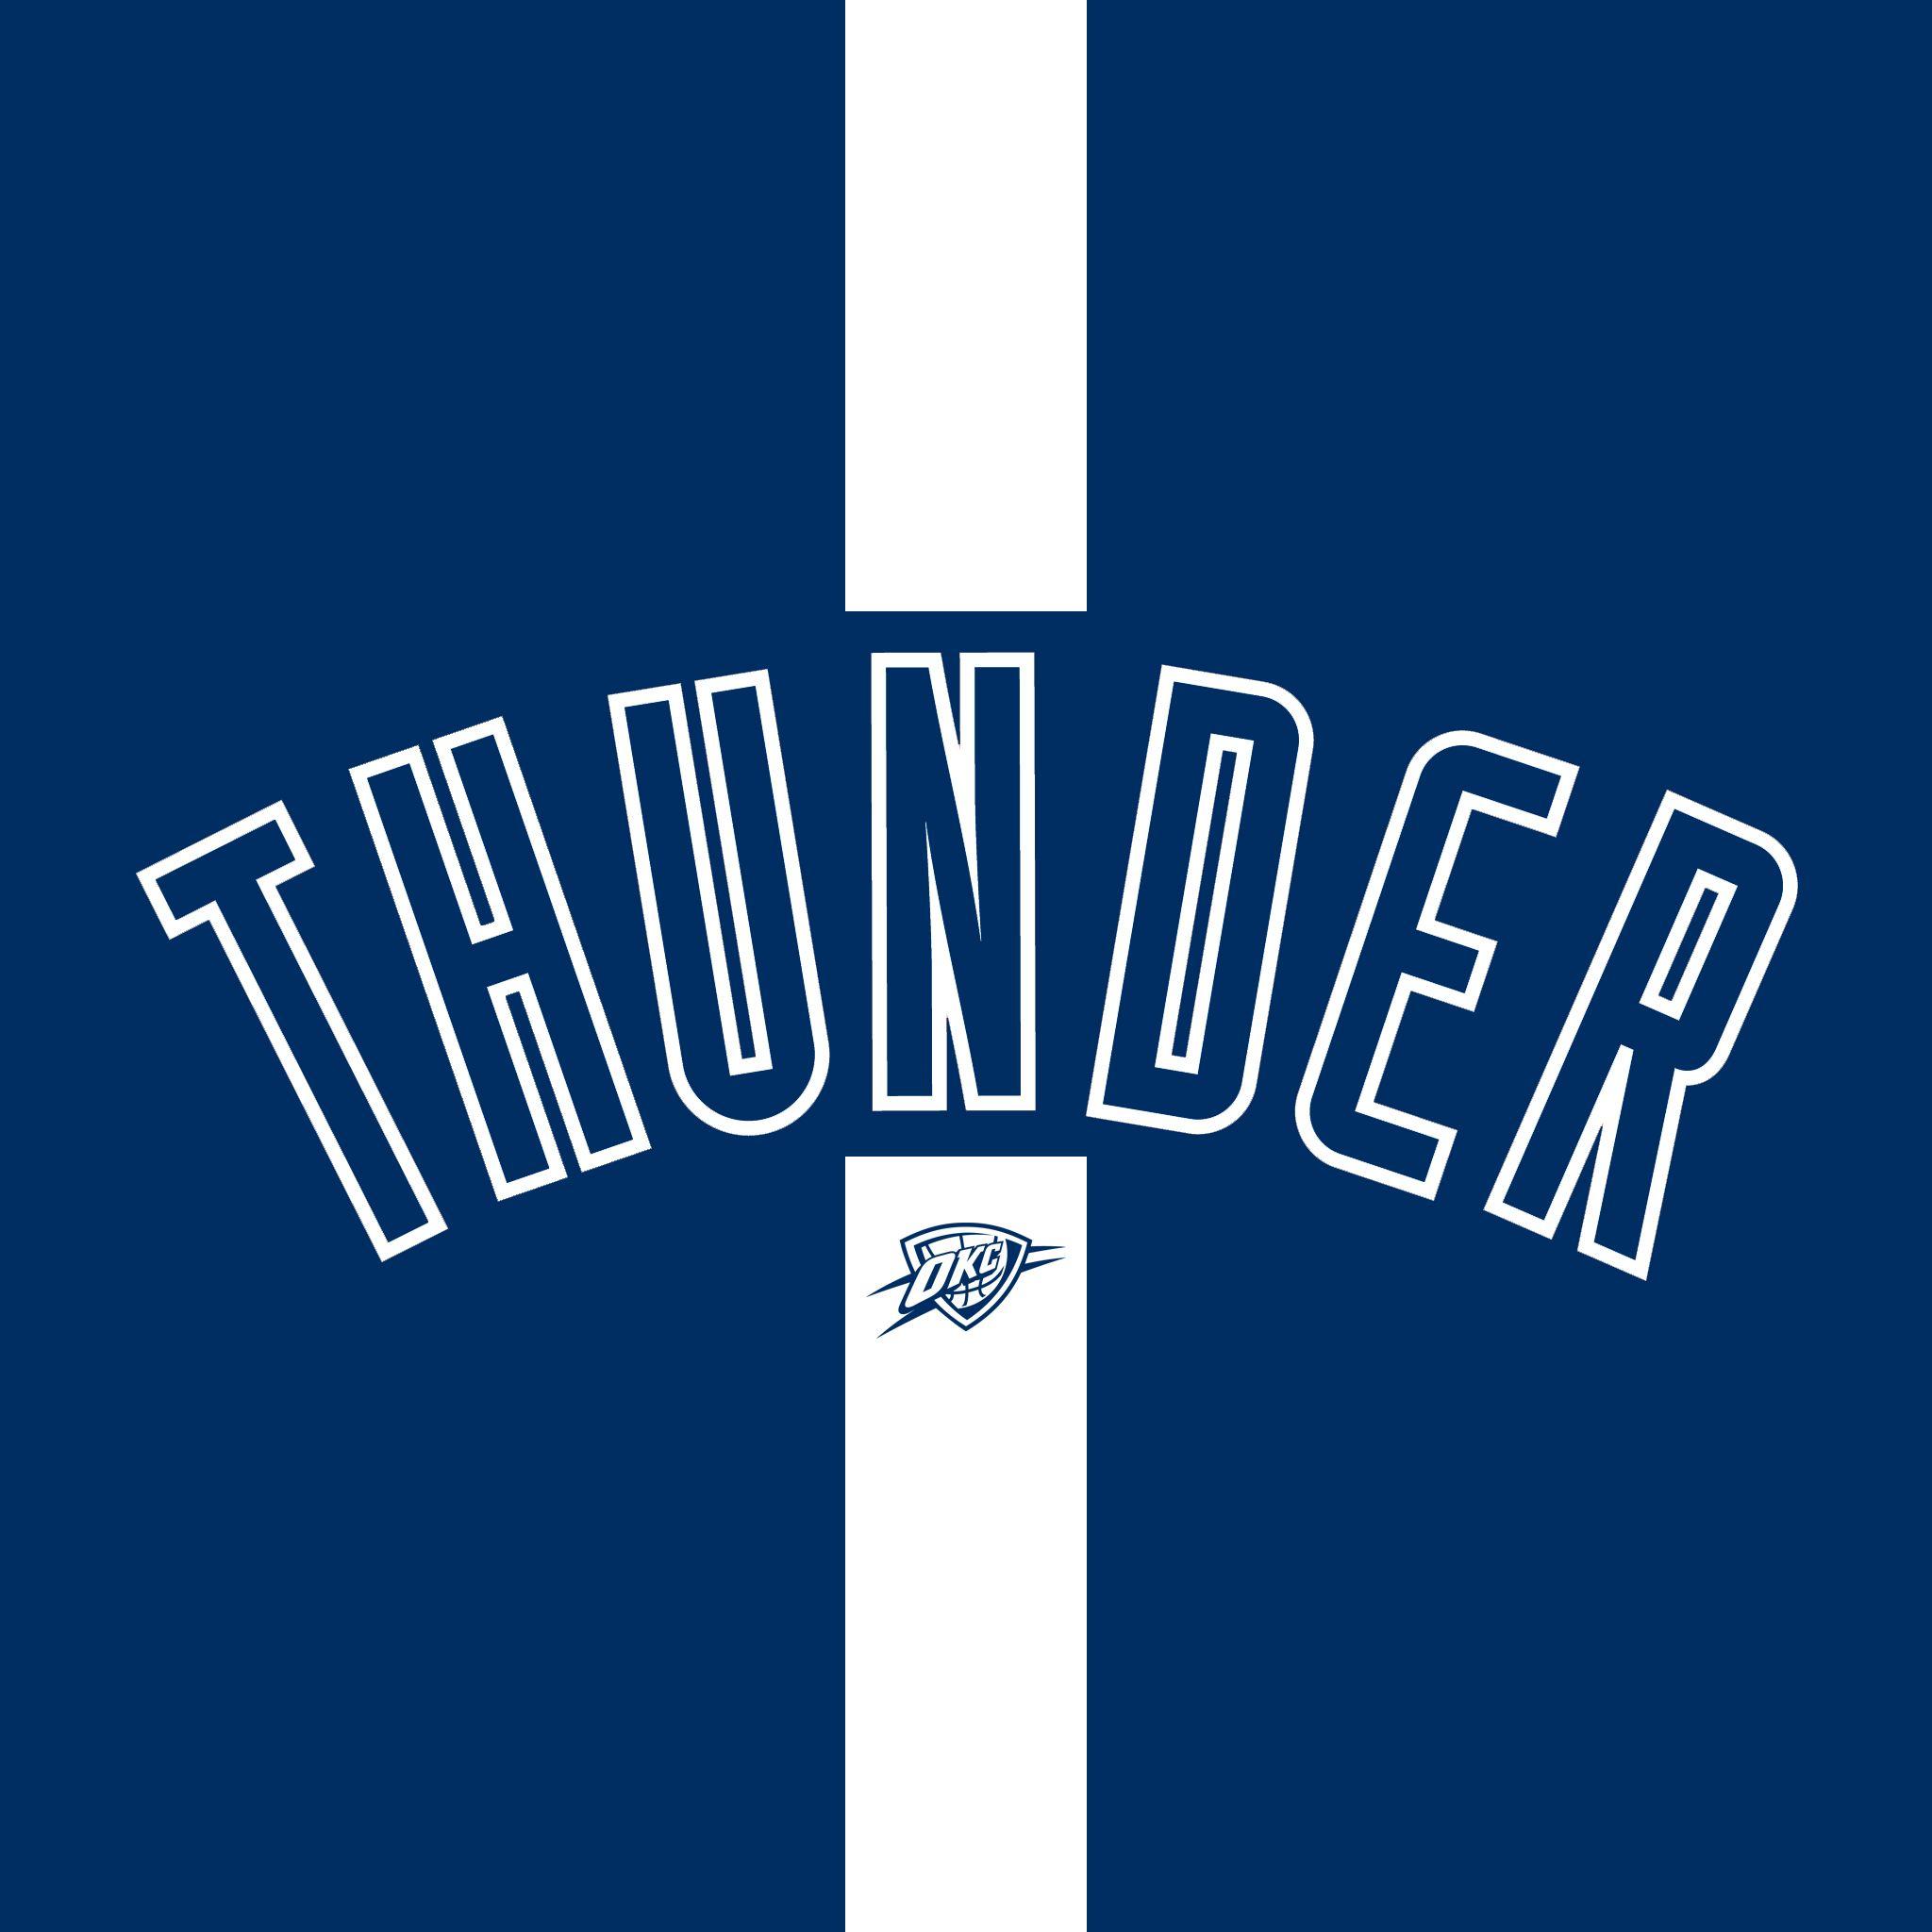 OKC Thunder Wallpaper: 2013 Playoff win 2 of 16